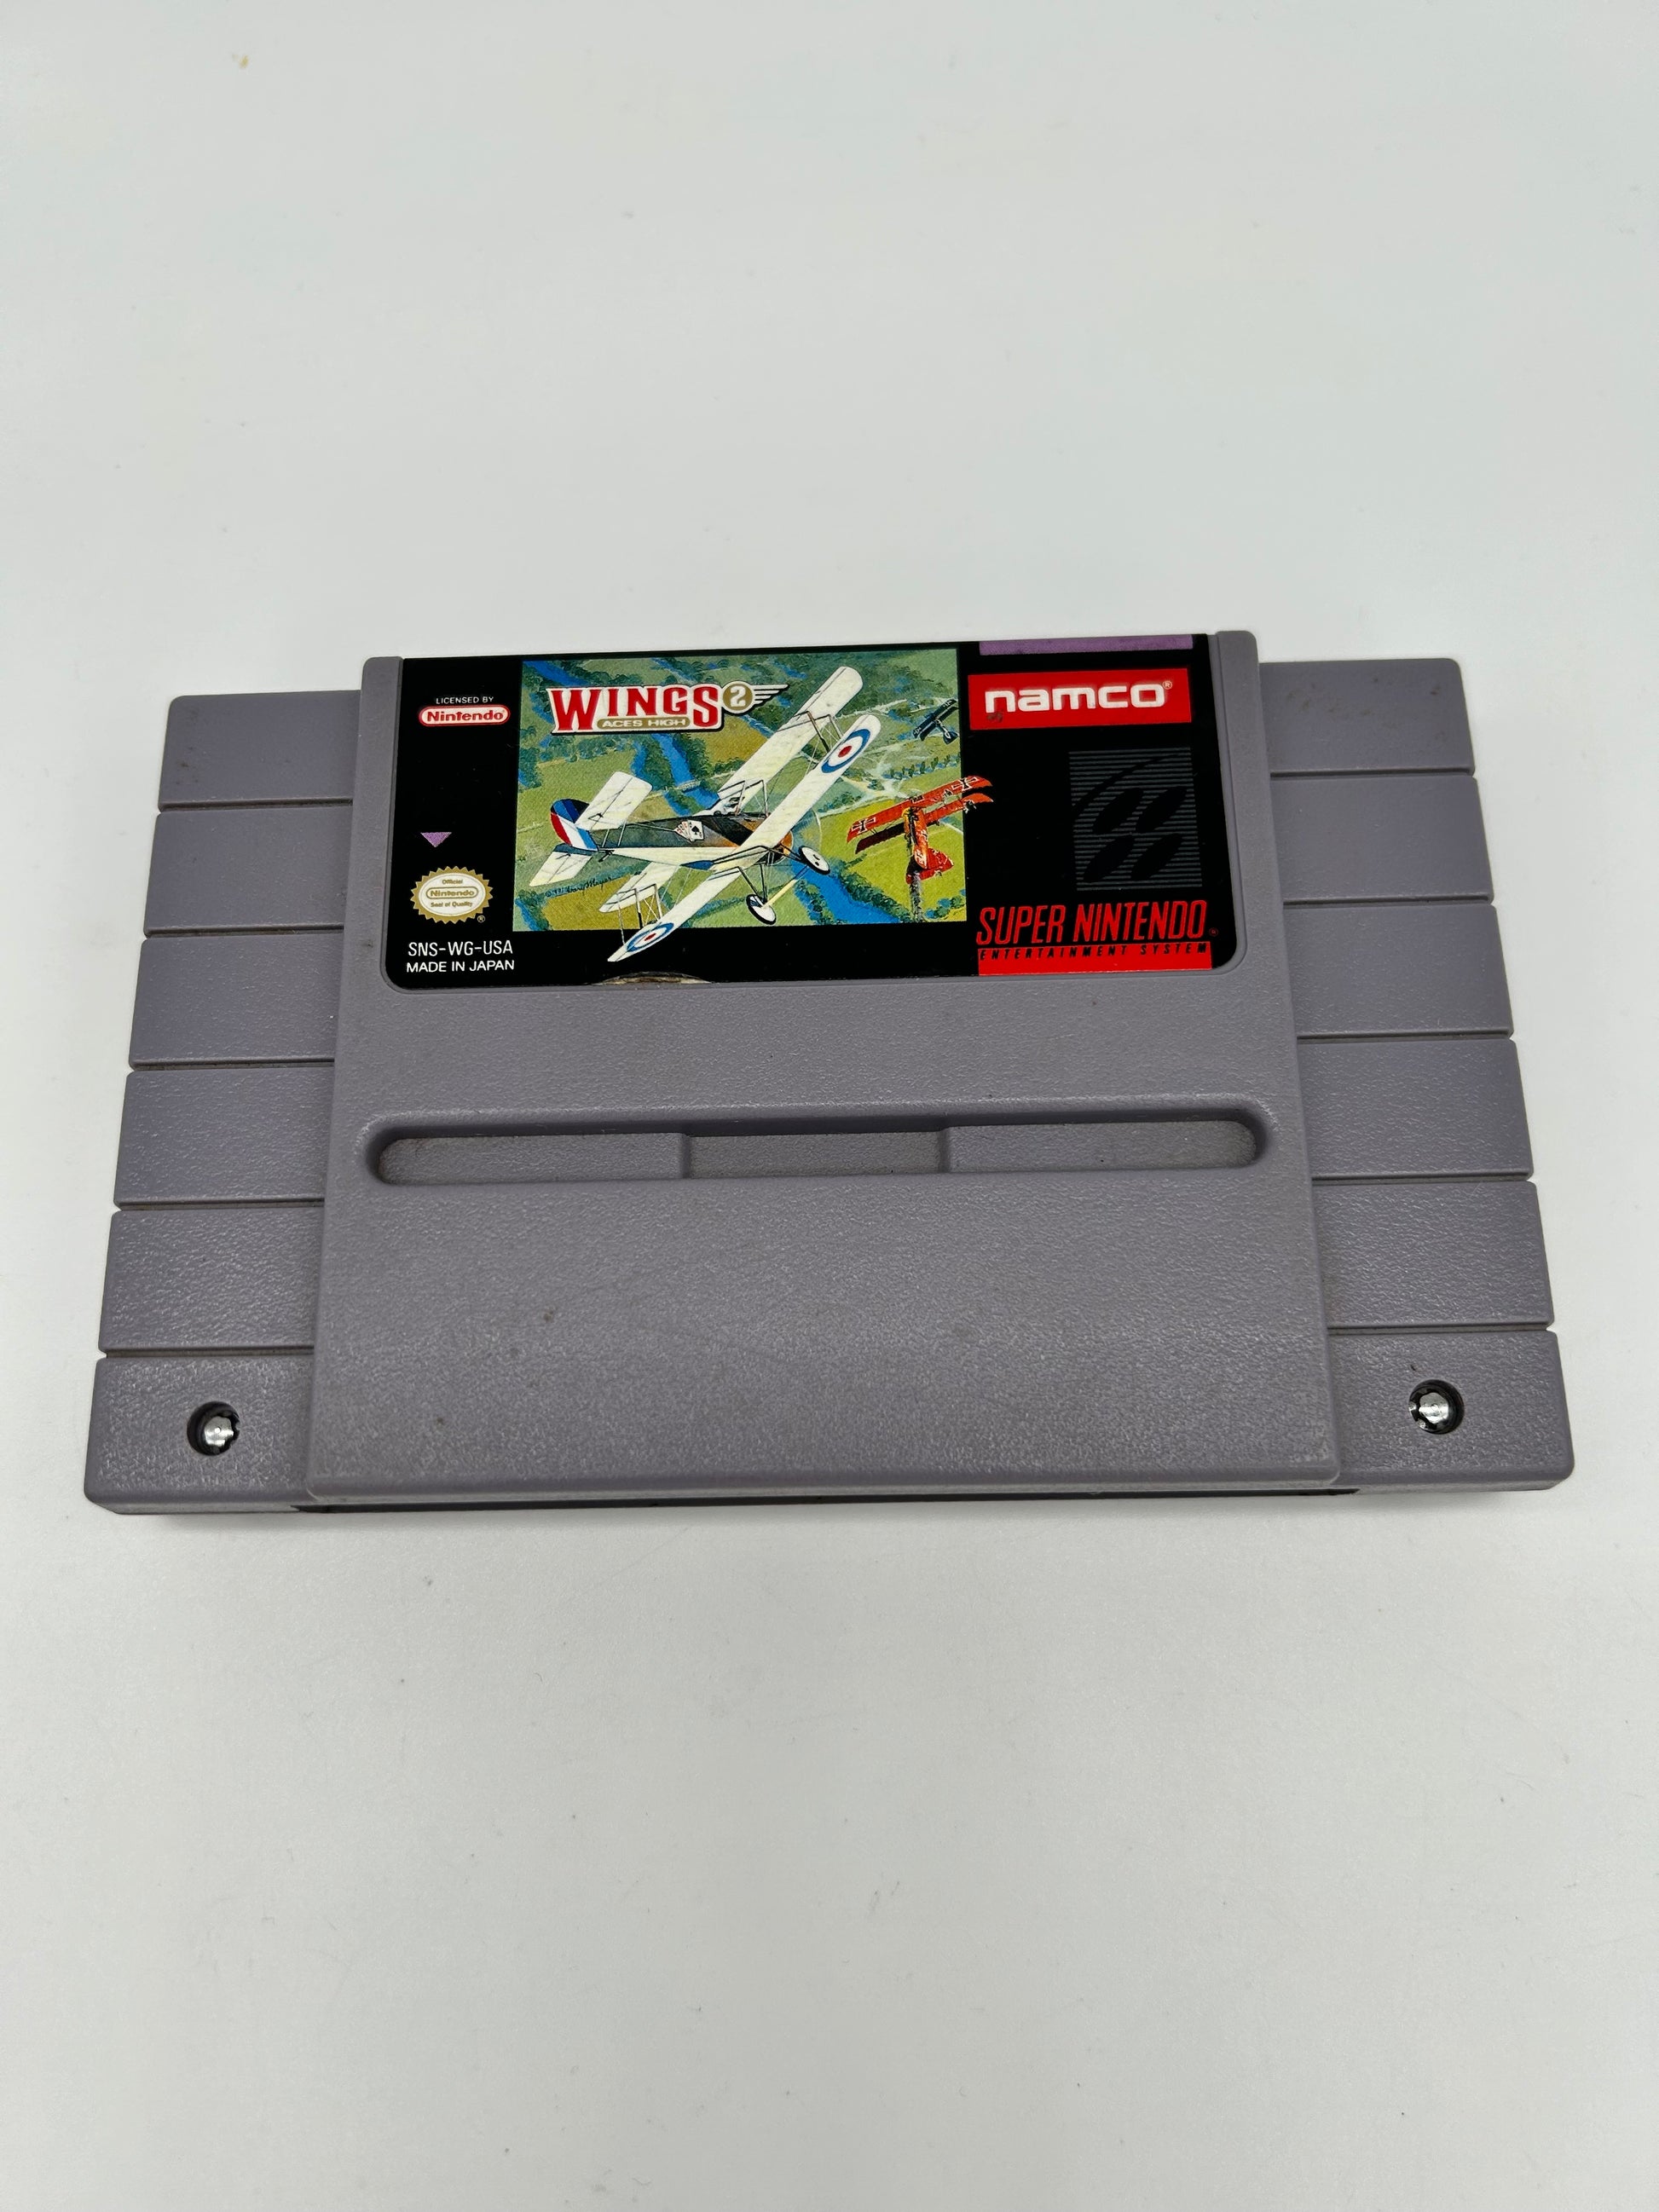 PiXEL-RETRO.COM : SUPER NINTENDO NES (SNES) GAME NTSC WINGS 2 ACES HIGH